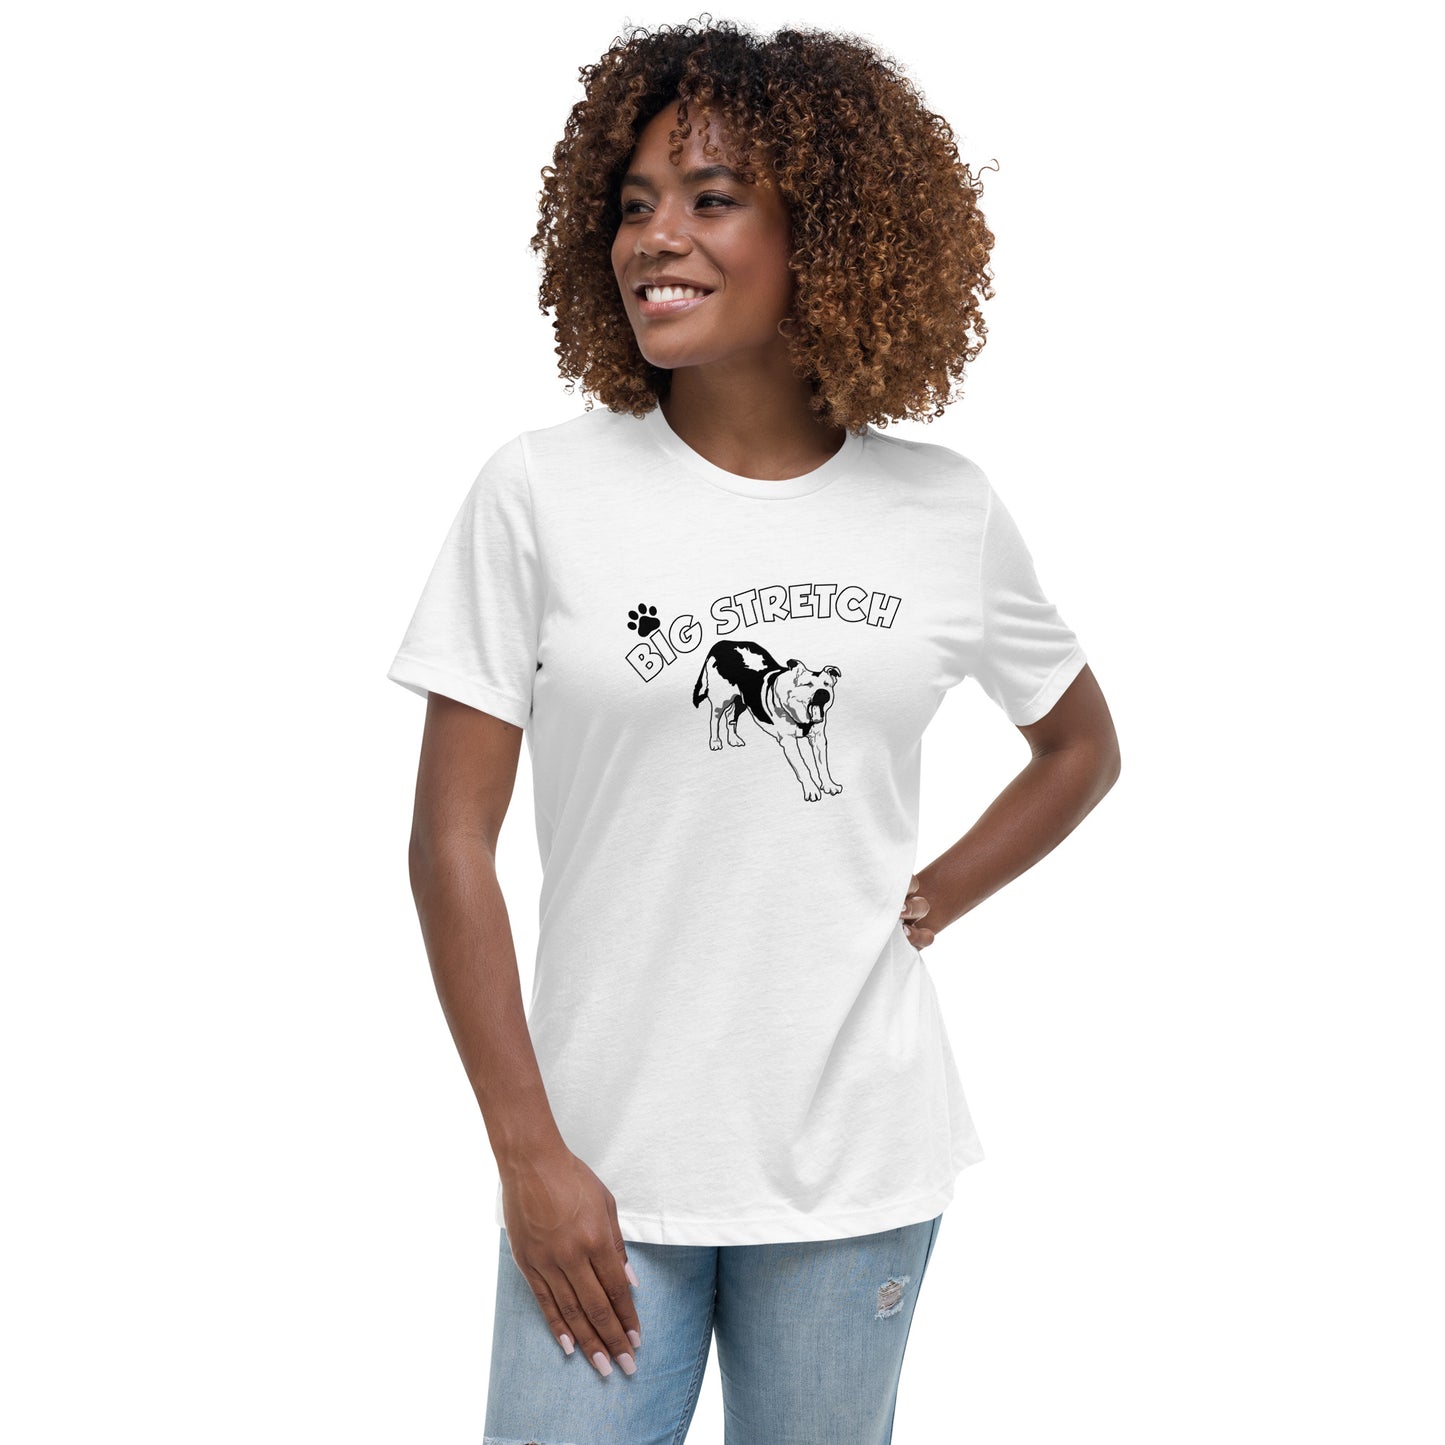 Big Stretch Dog Women's Relaxed T-Shirt